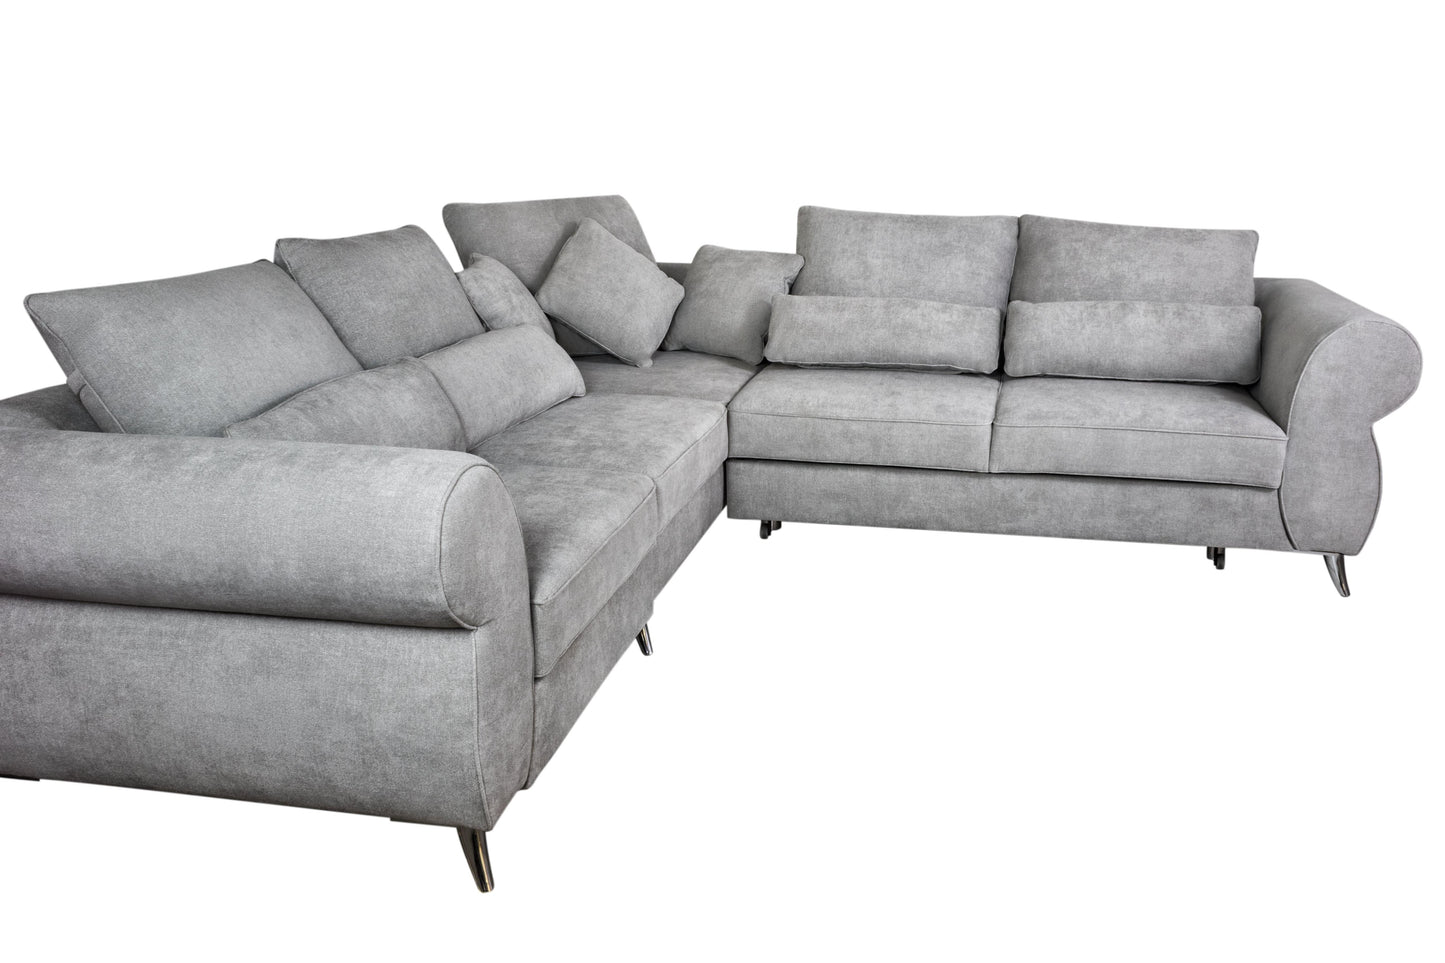 ROYAL Sleeper Sectional Sofa with storage